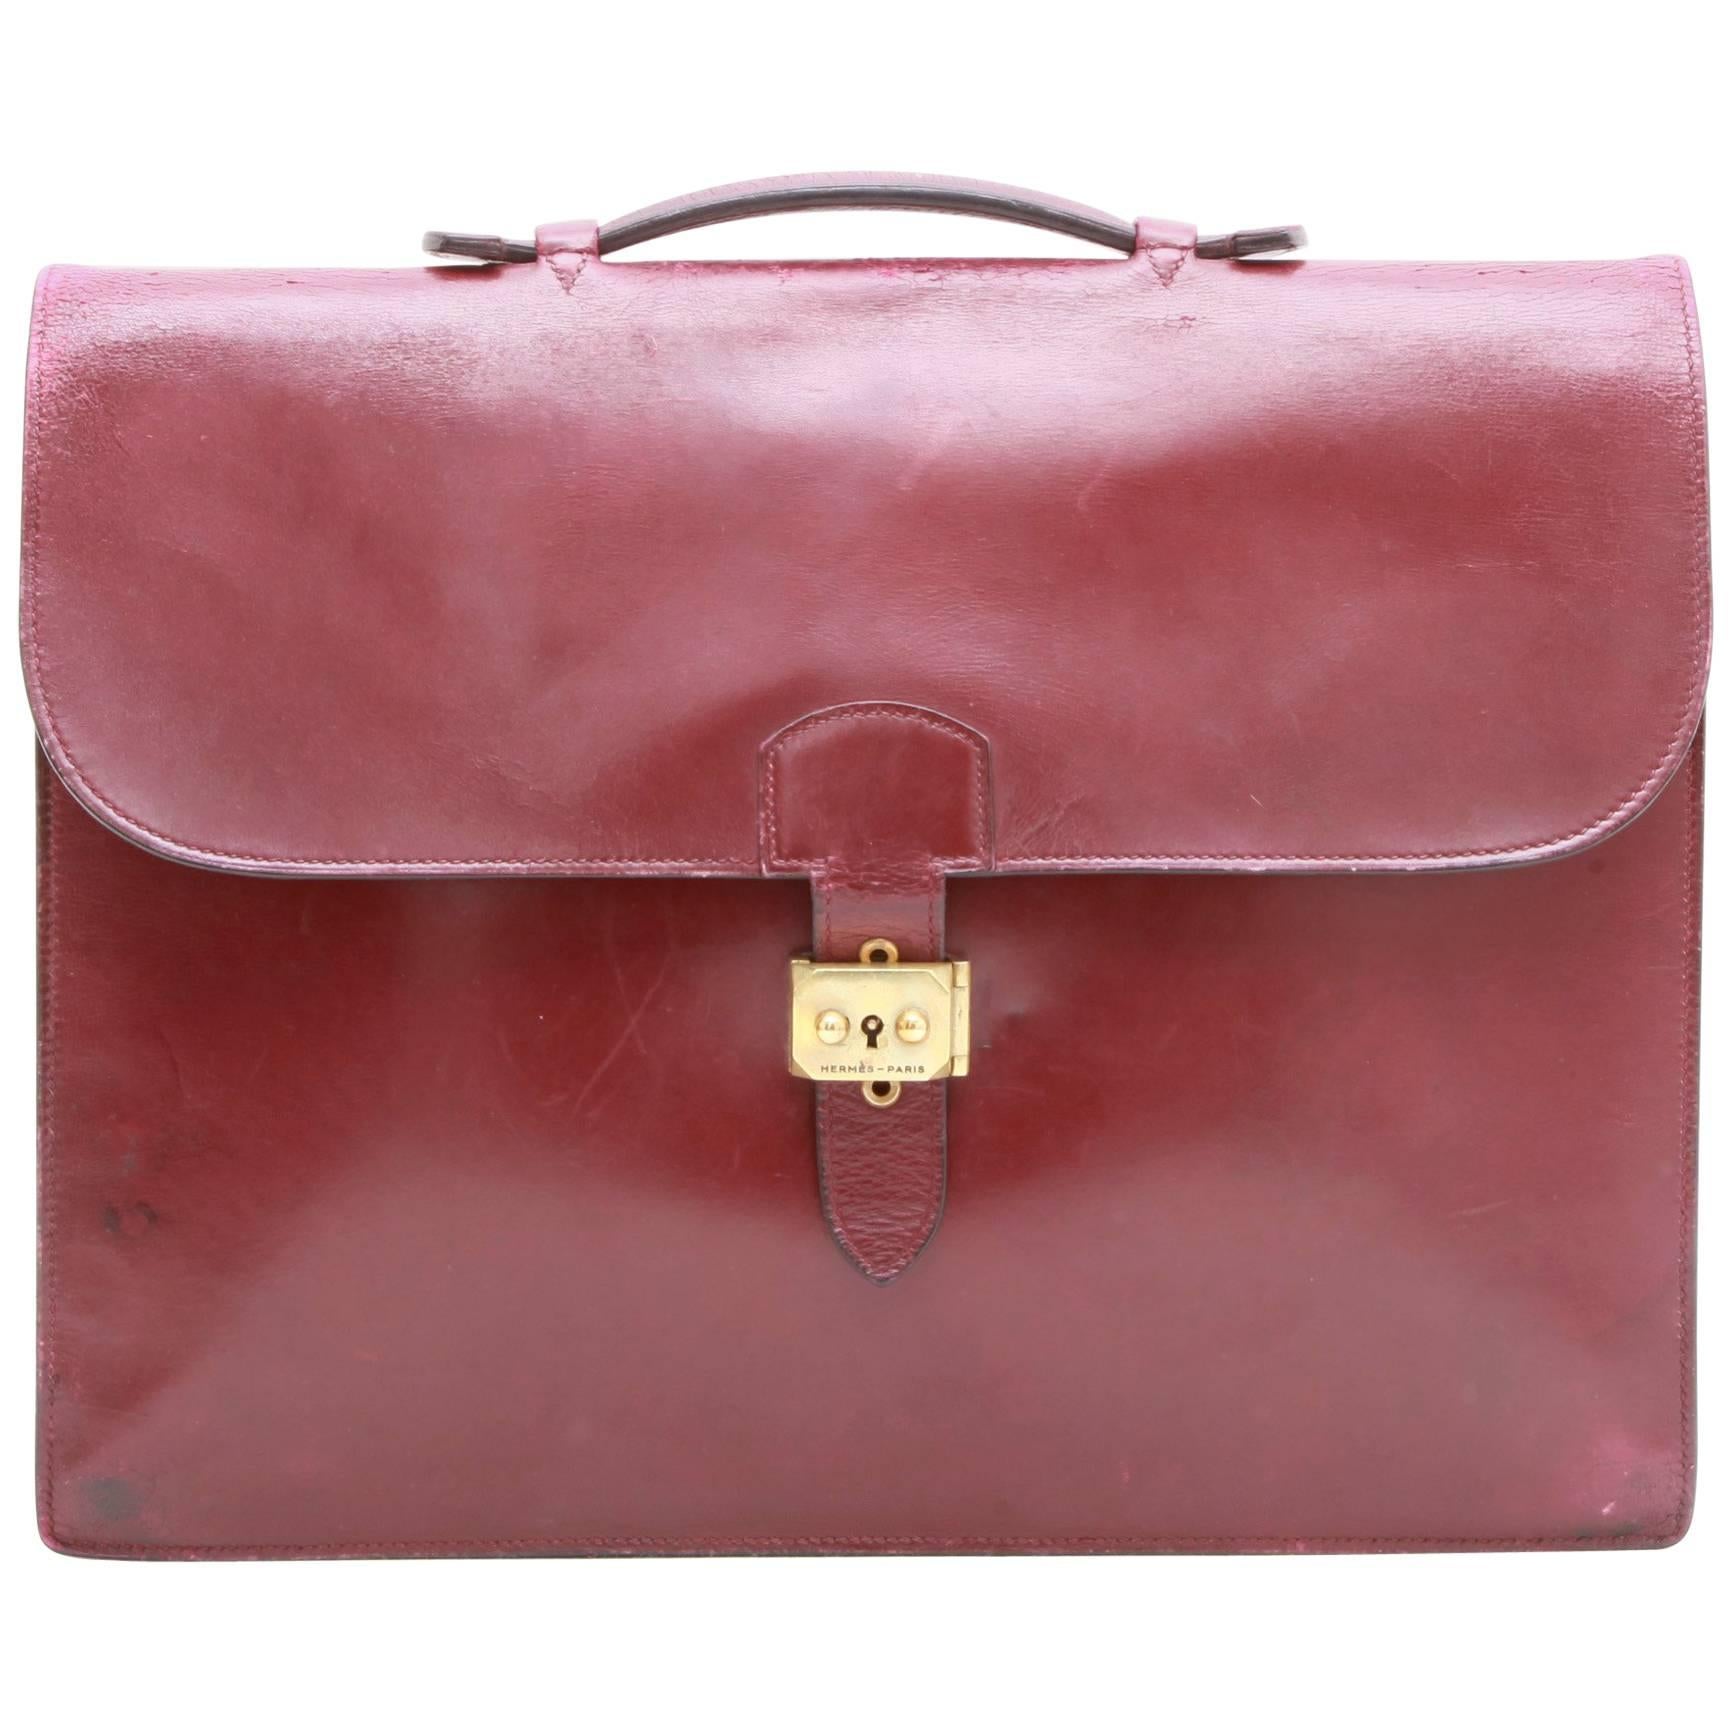 HERMES Vintage Satchel Bag in H Red Box Leather